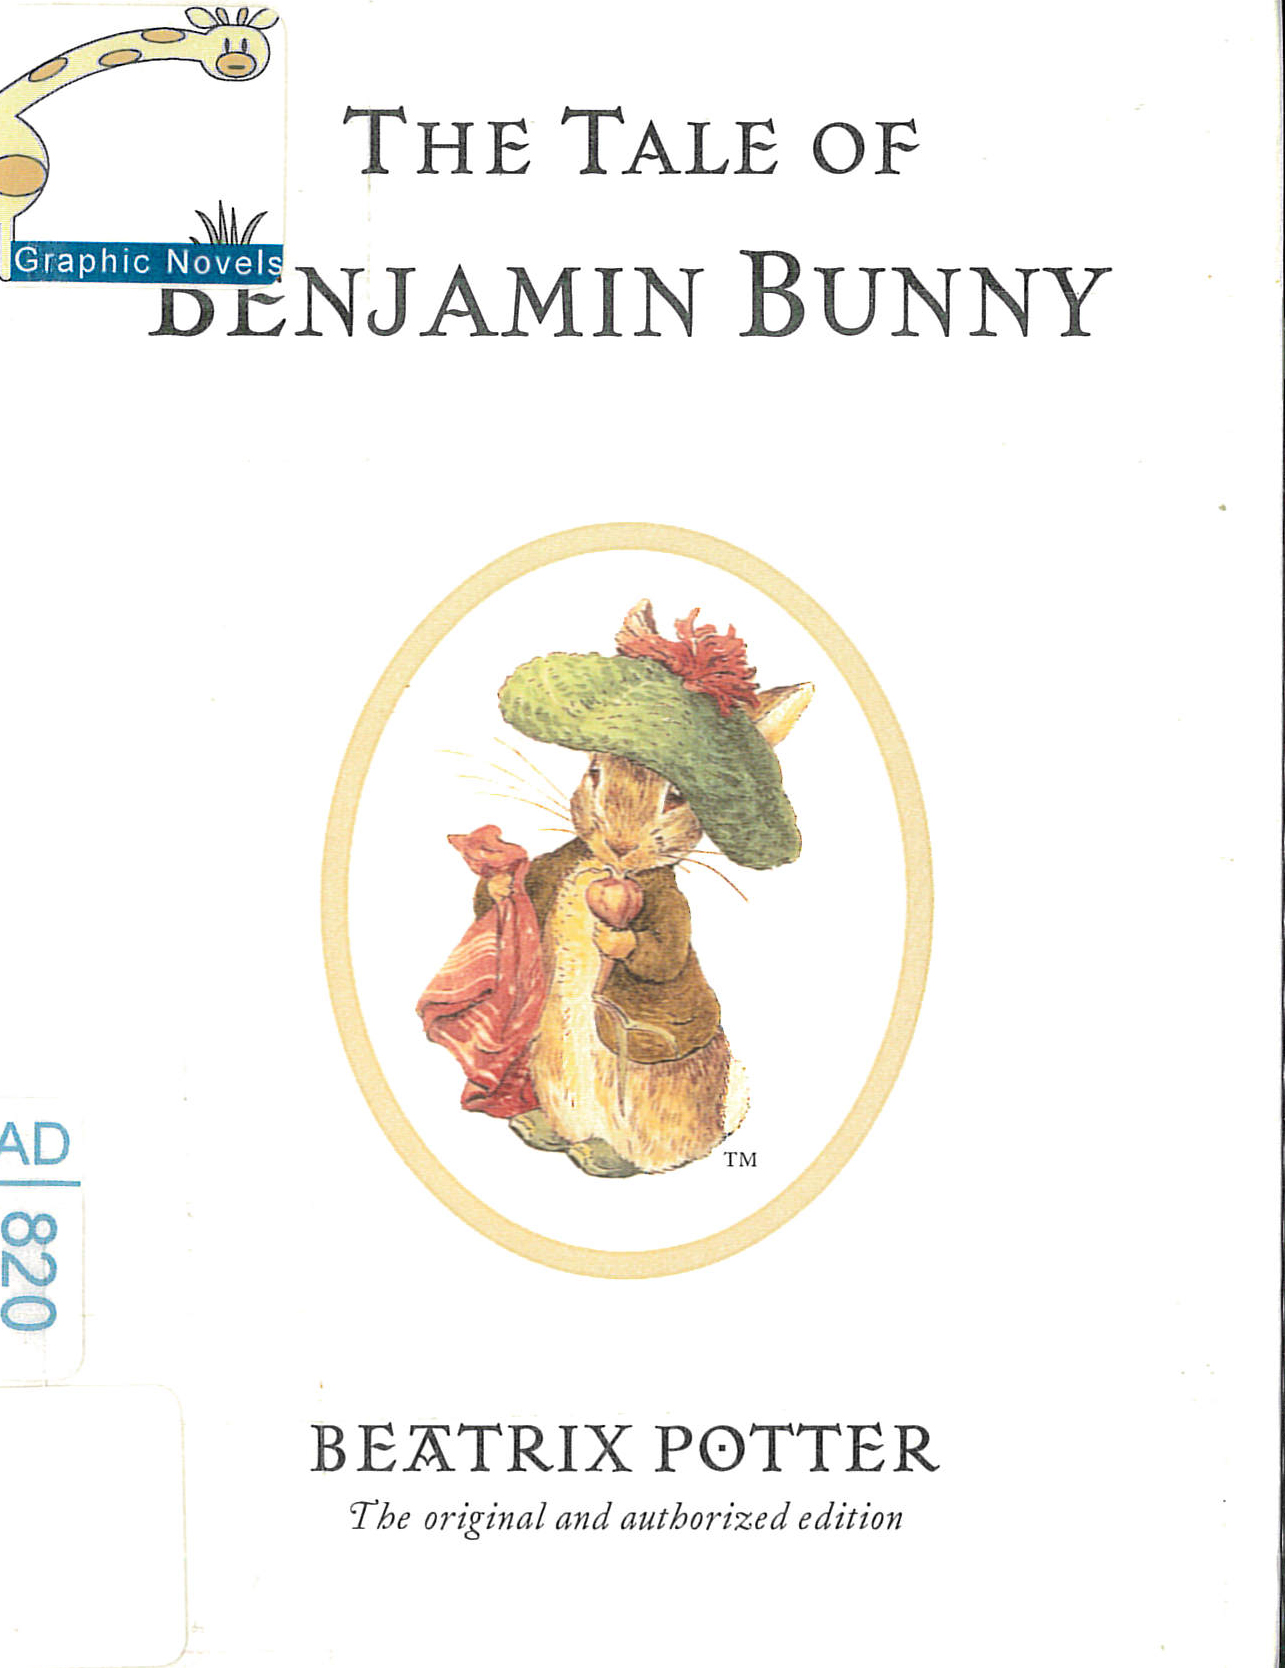 The tale of Benjamin Bunny